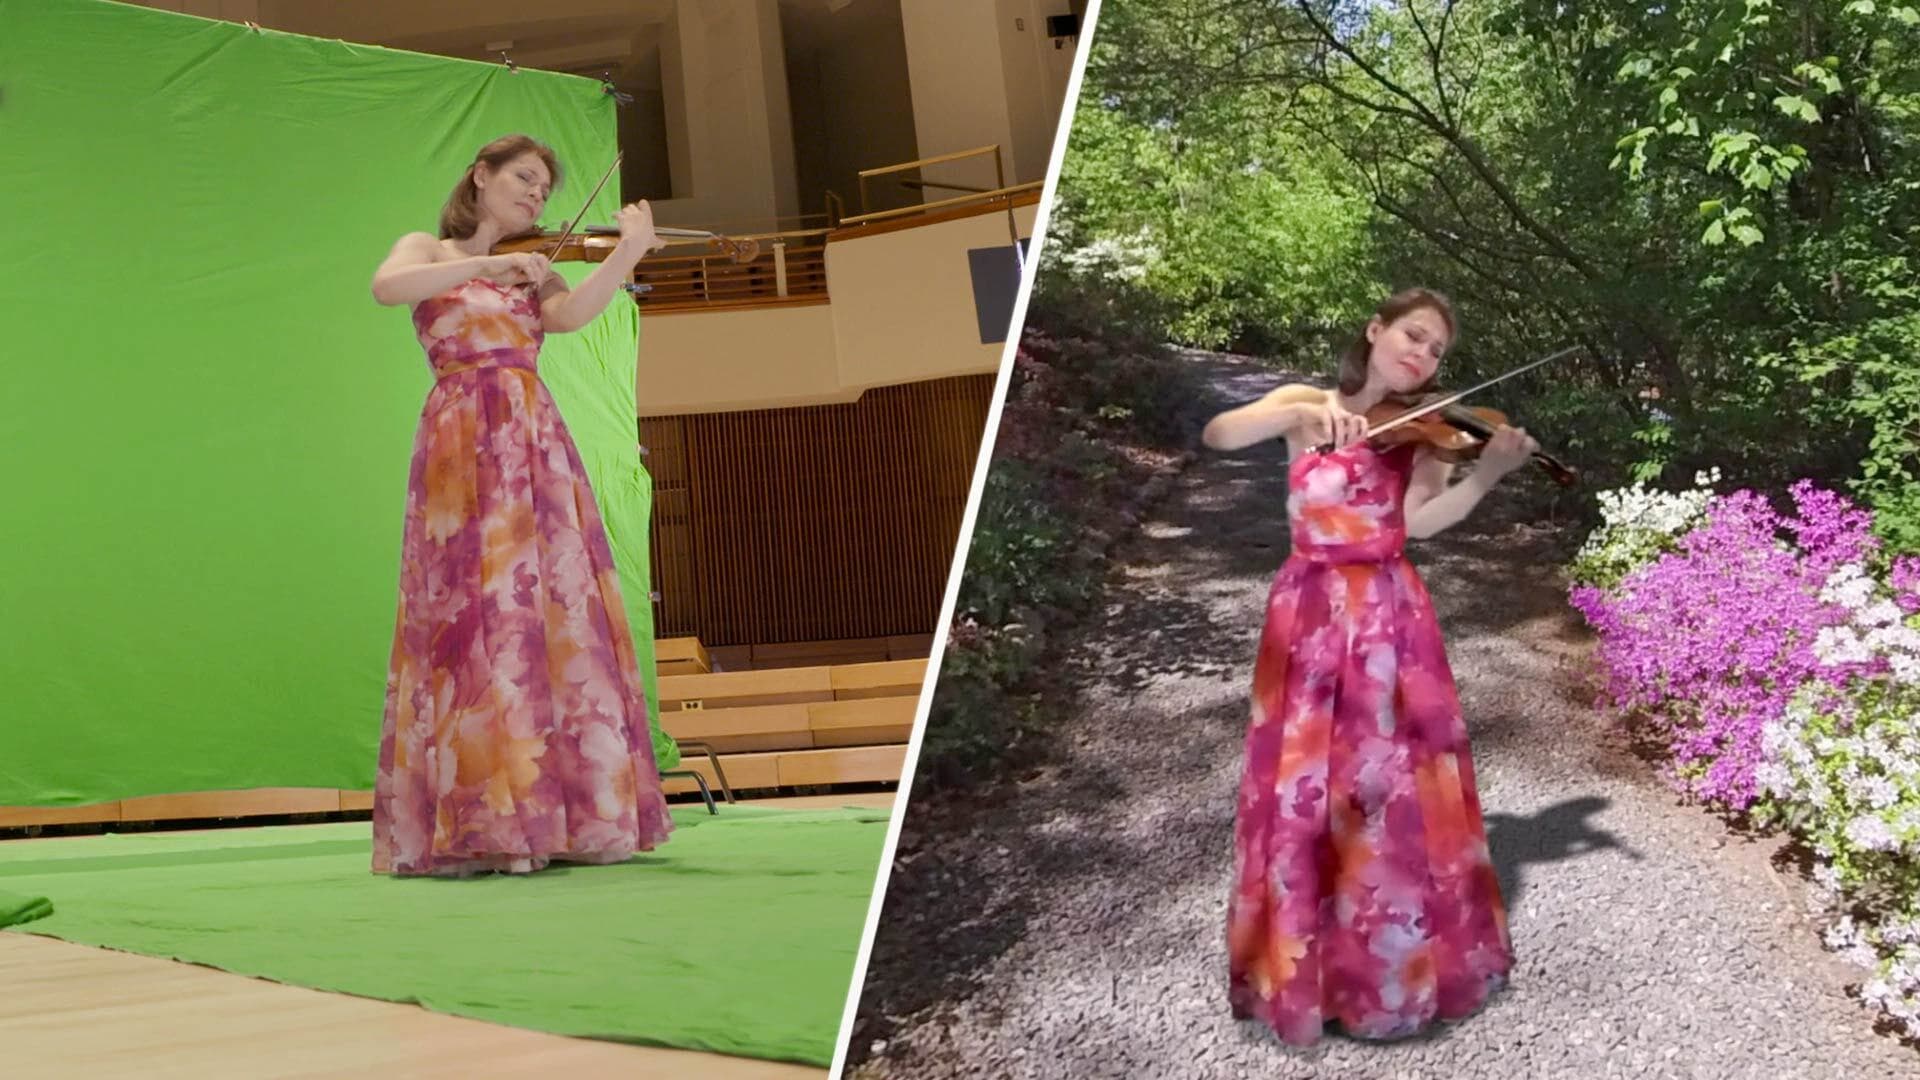 Split shot of Irina Muresanu playing violin in front of green screen